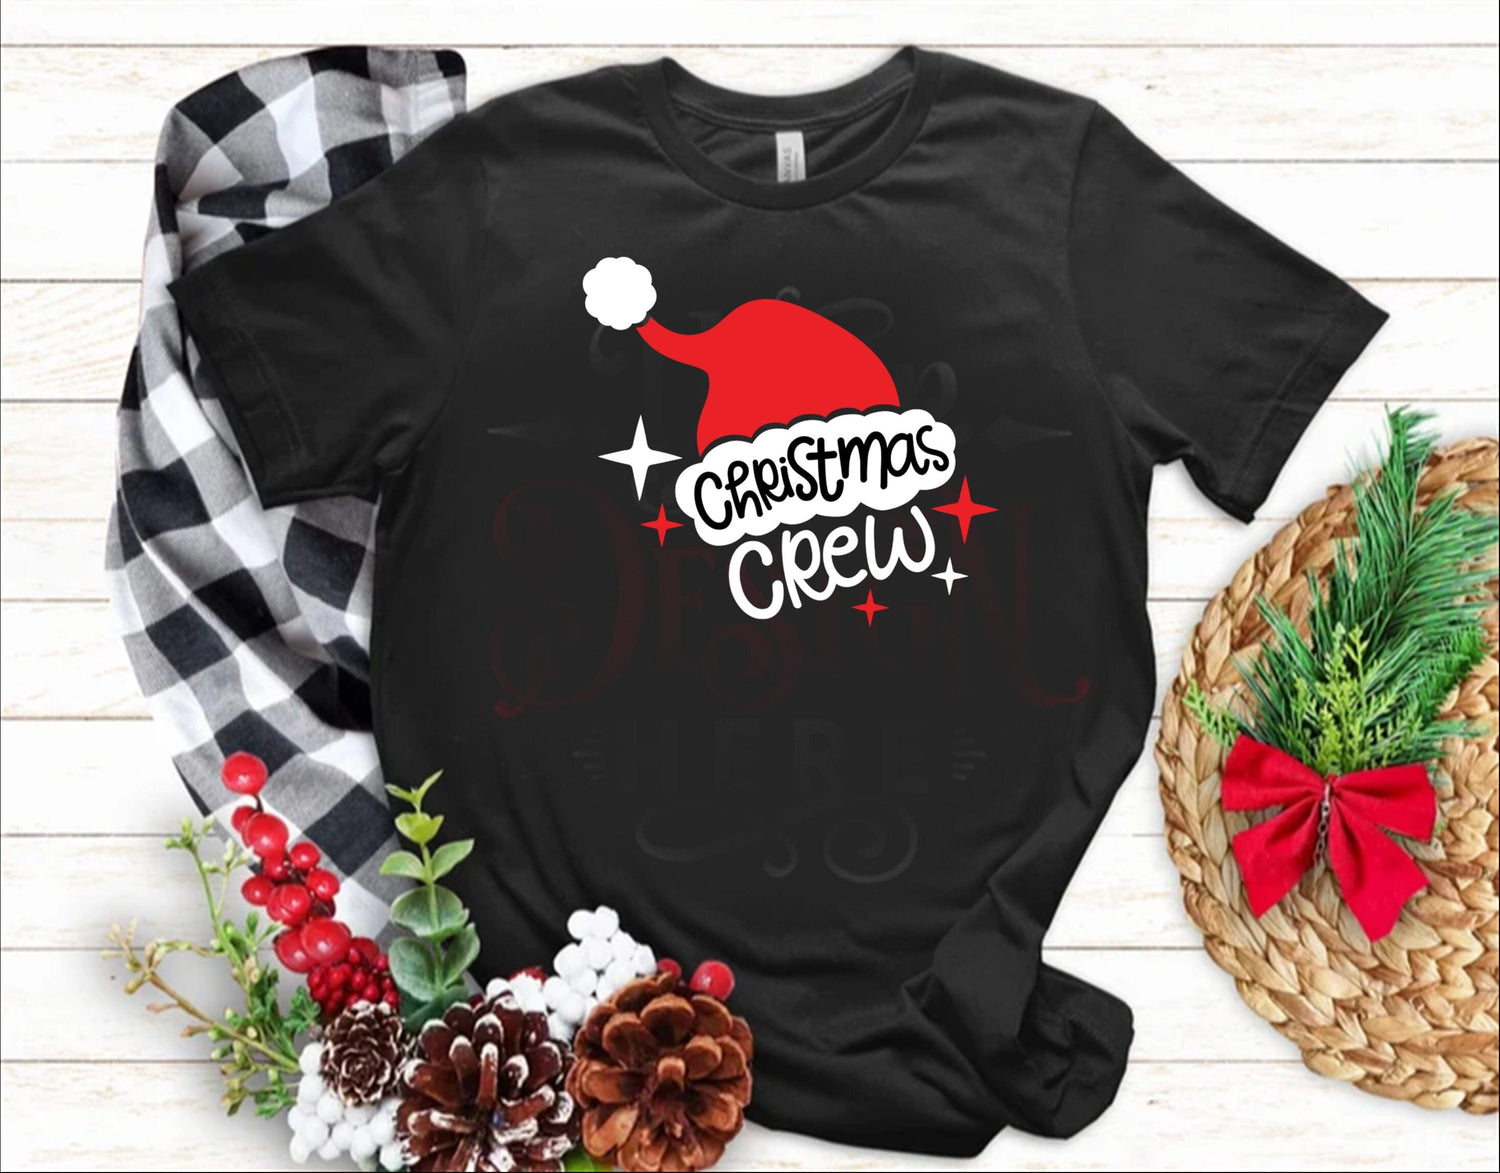 Purple LadyBug Decor Christmas Crew Shirts | Family Christmas Shirts | Family Matching Shirts | Christmas Tees | Matching Shirts | Holiday Shirts | Santa Shirts